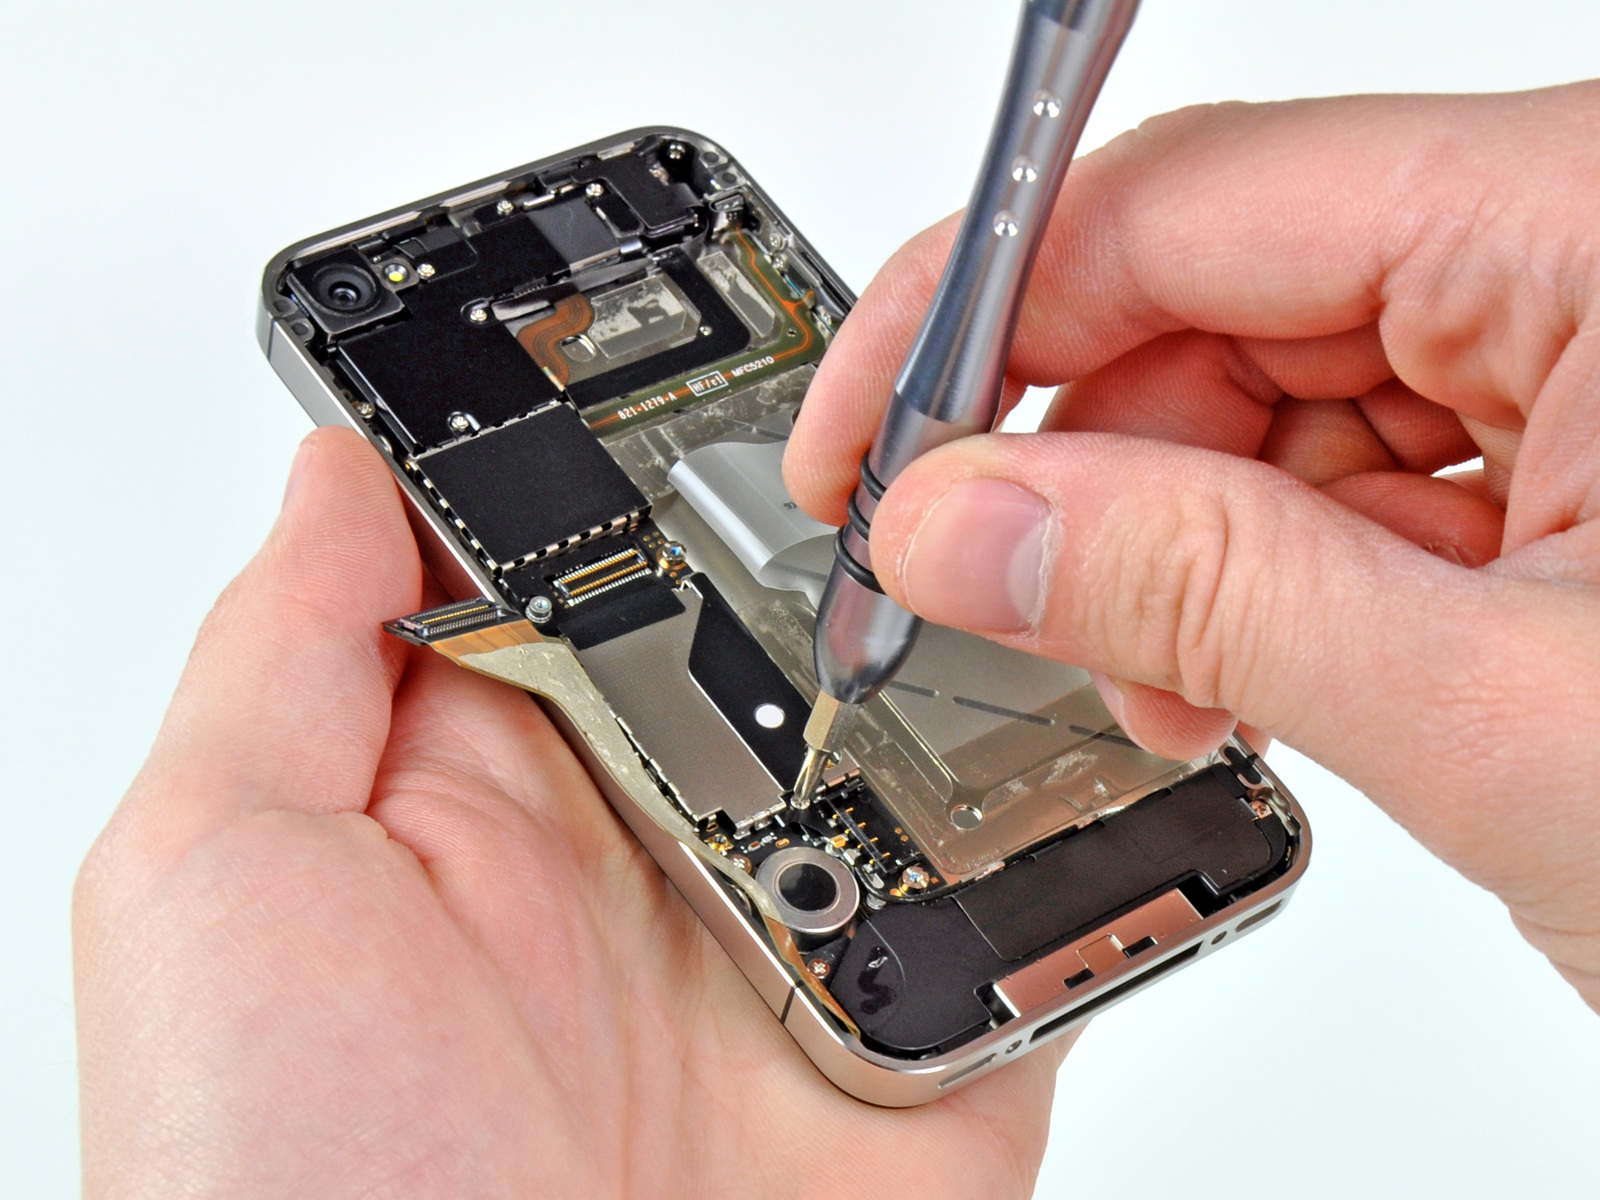 Verizon iPhone 4 teardown: World Phone CDMA/GSM radio inside - SlashGear